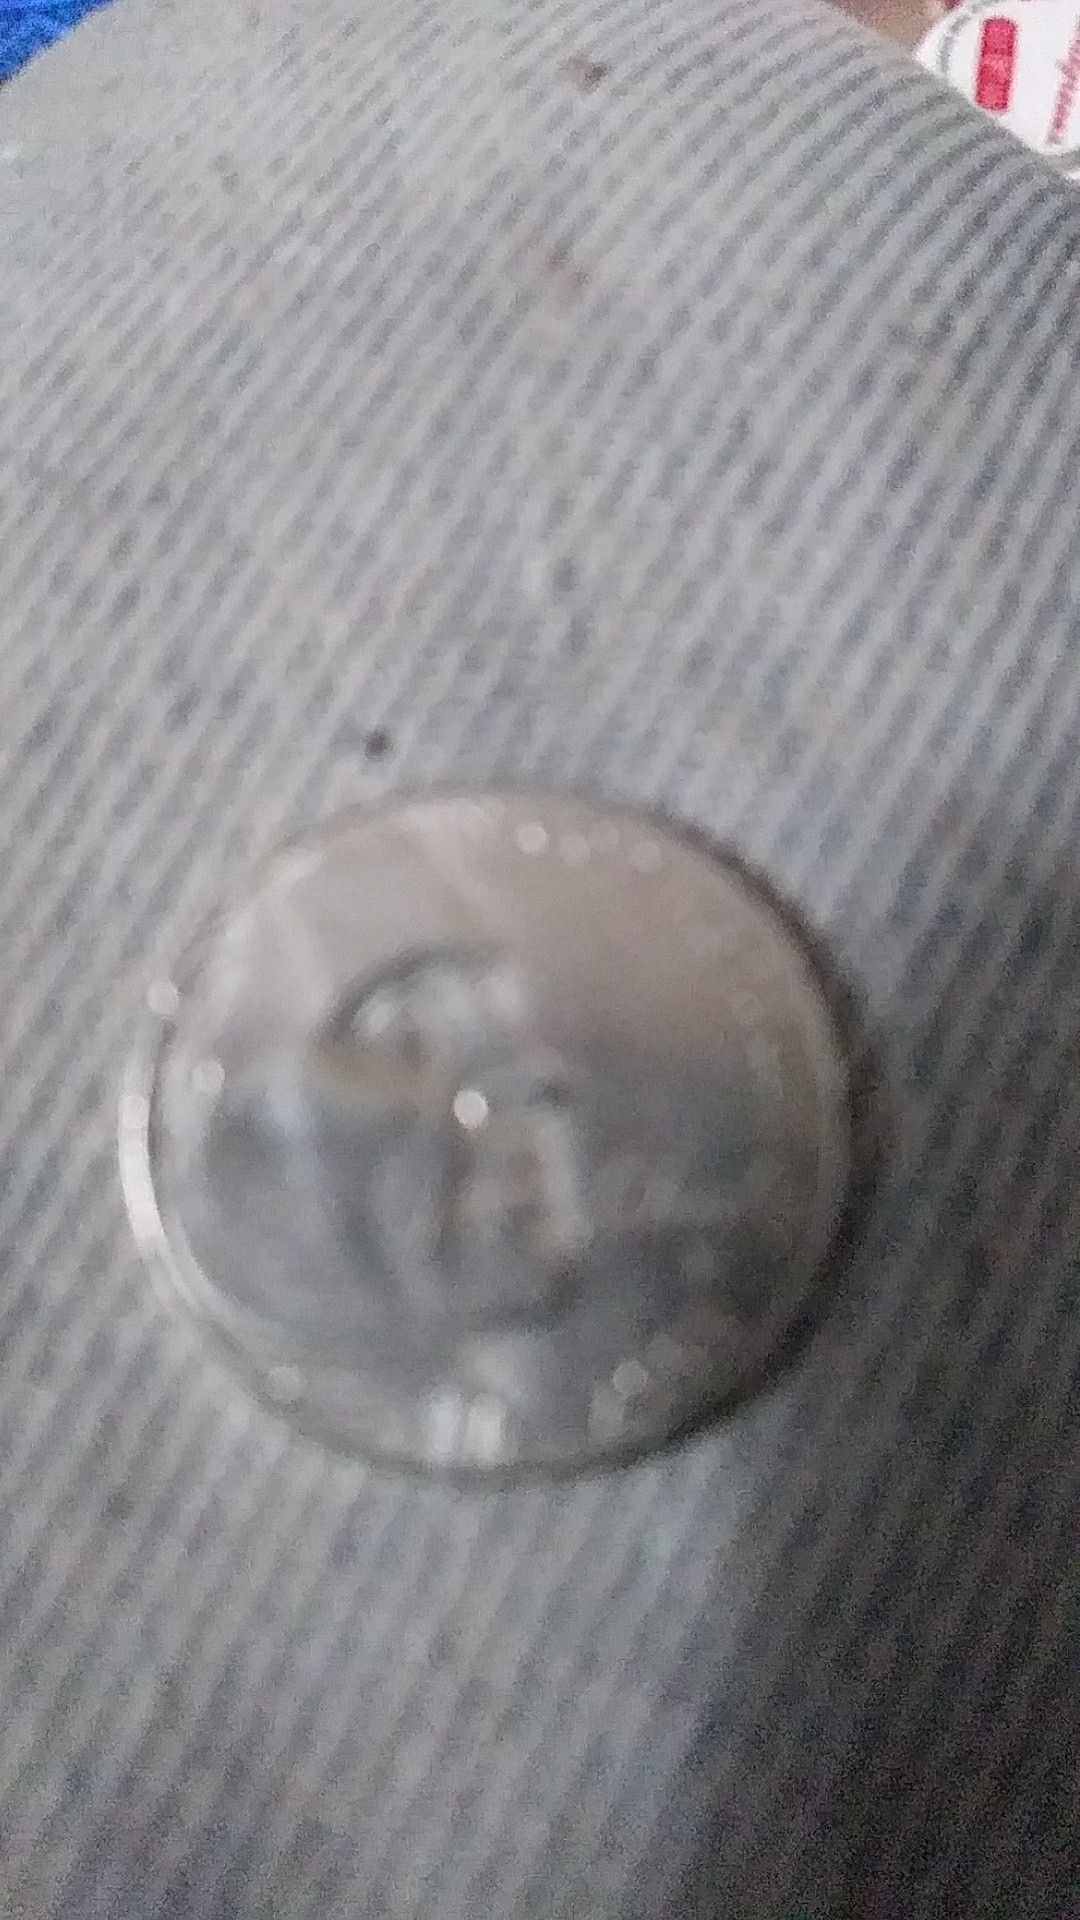 2005 p nickel